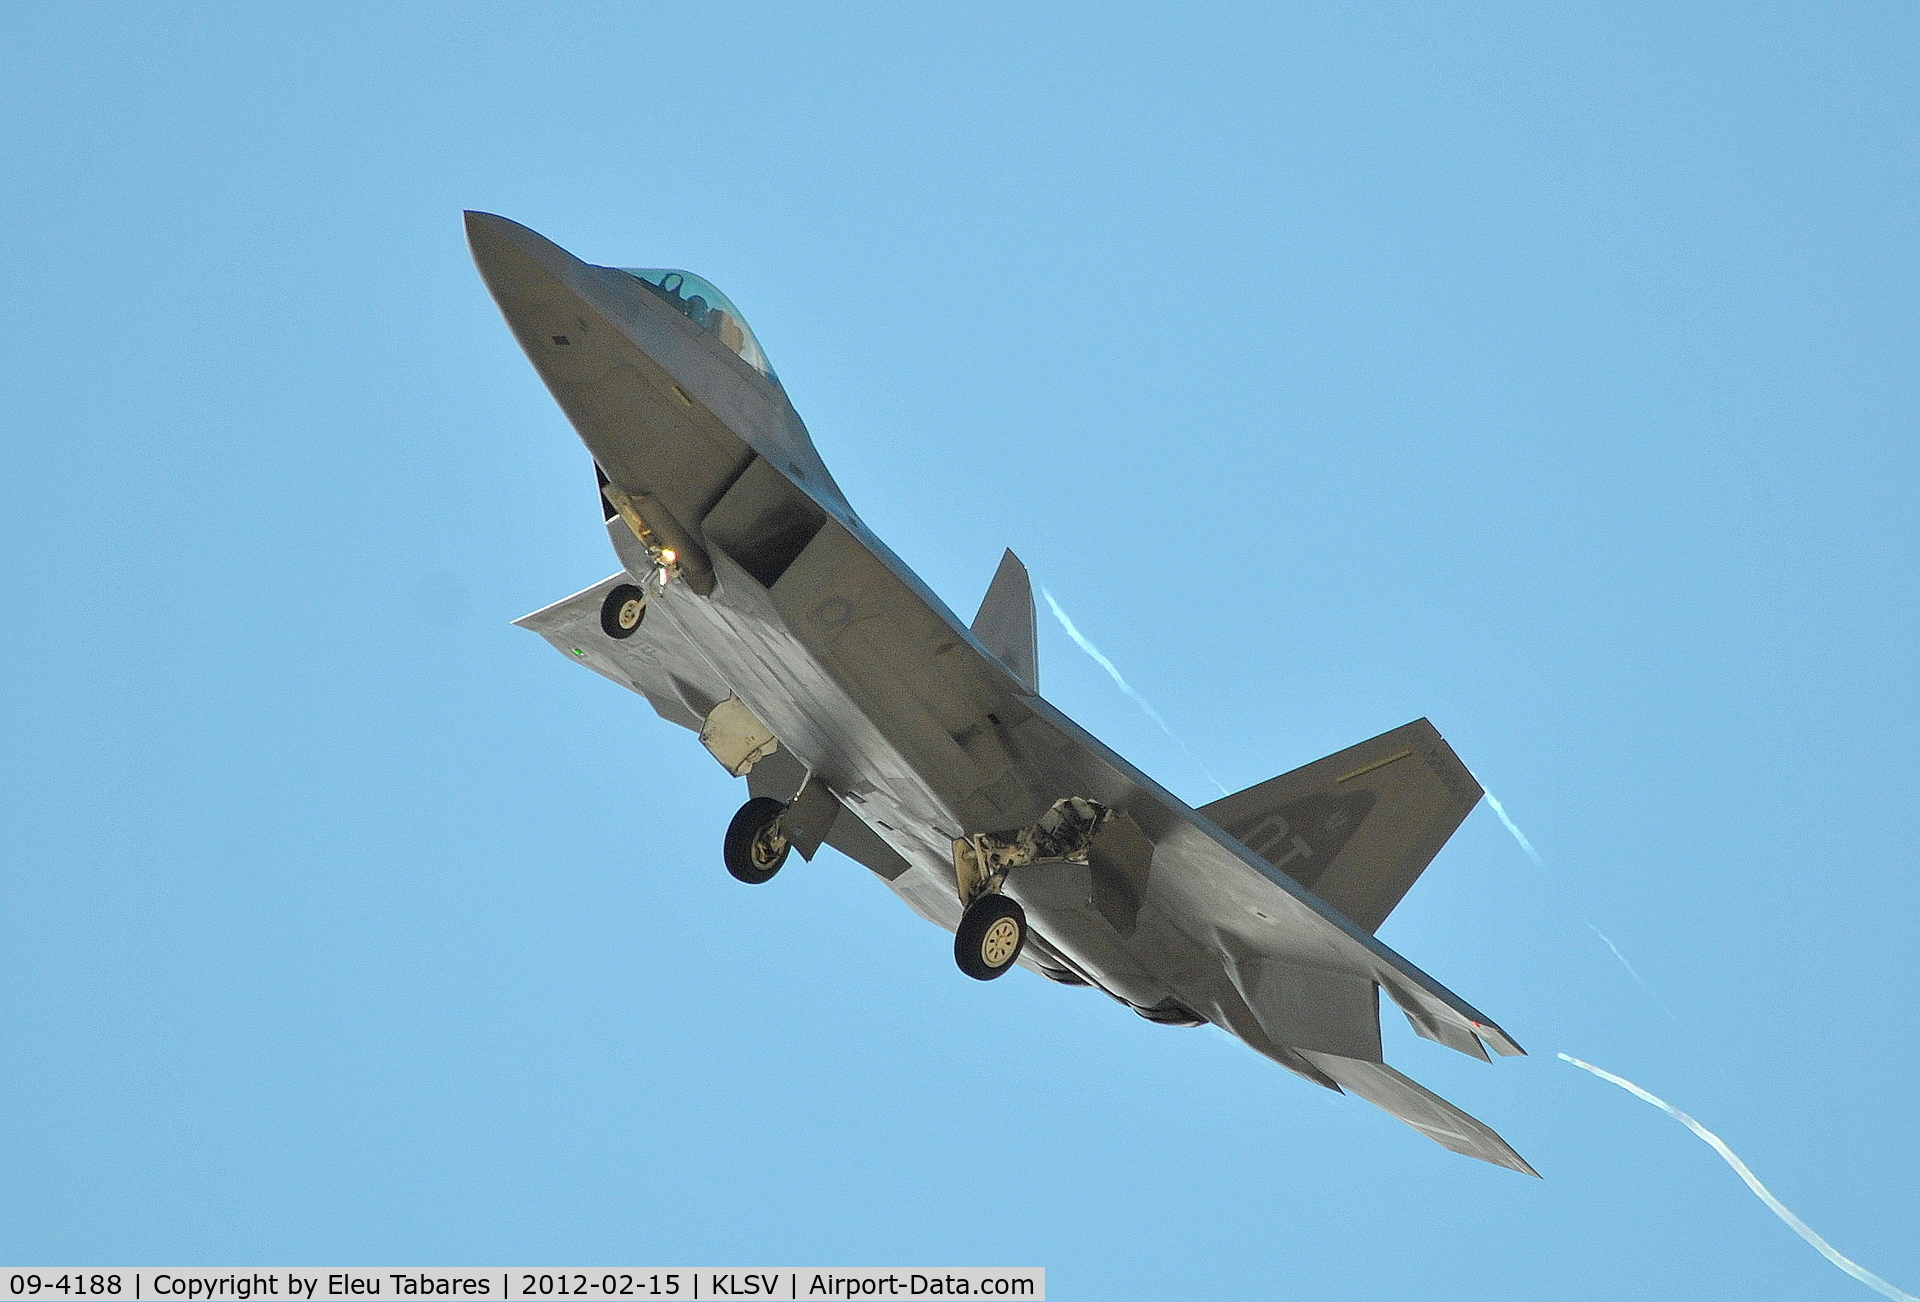 09-4188, Lockheed Martin F-22A Raptor C/N 4188, Taken over Nellis Air Force Base, Nevada